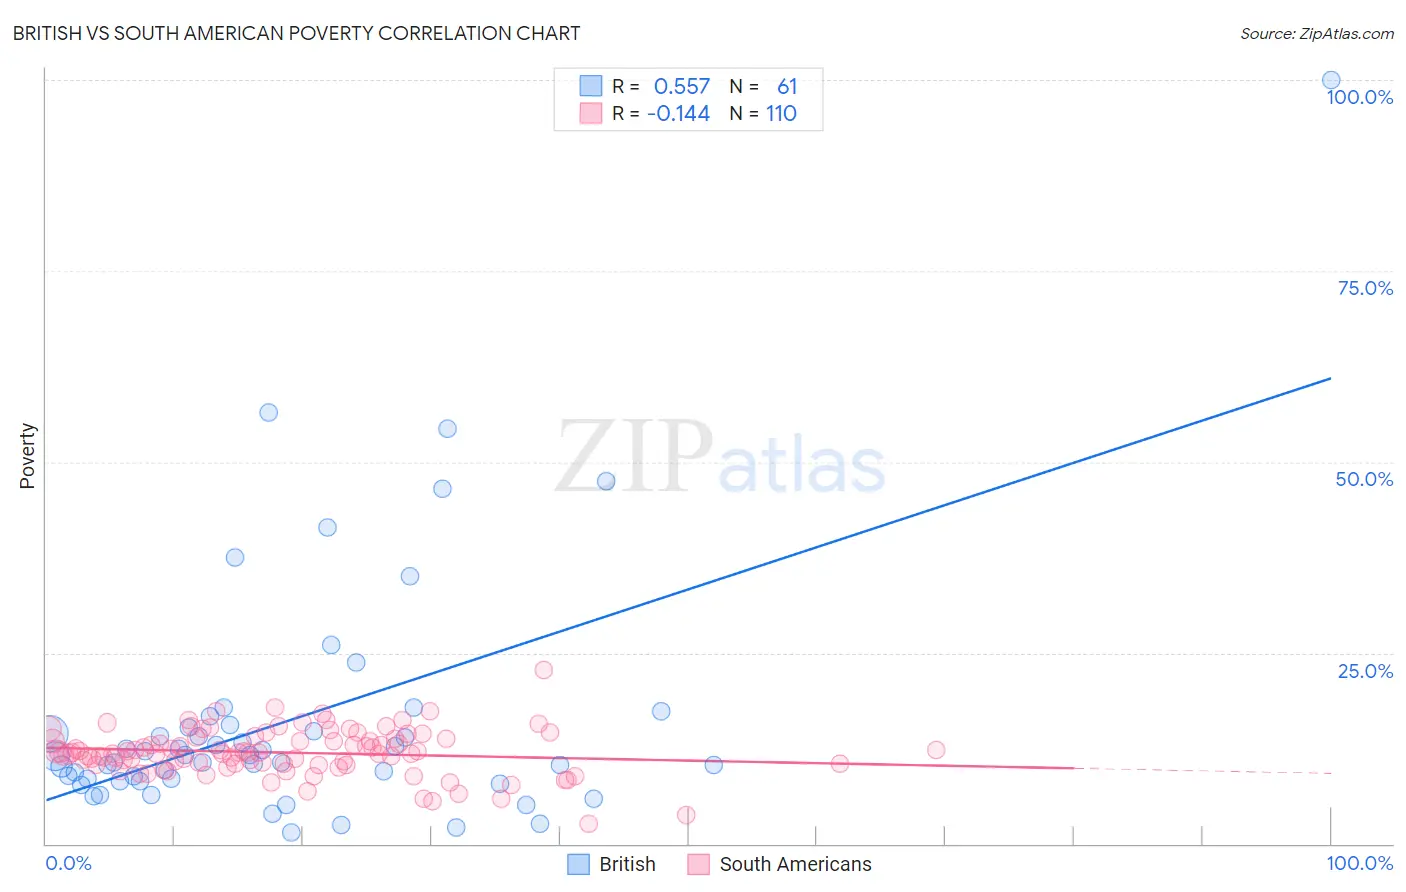 British vs South American Poverty